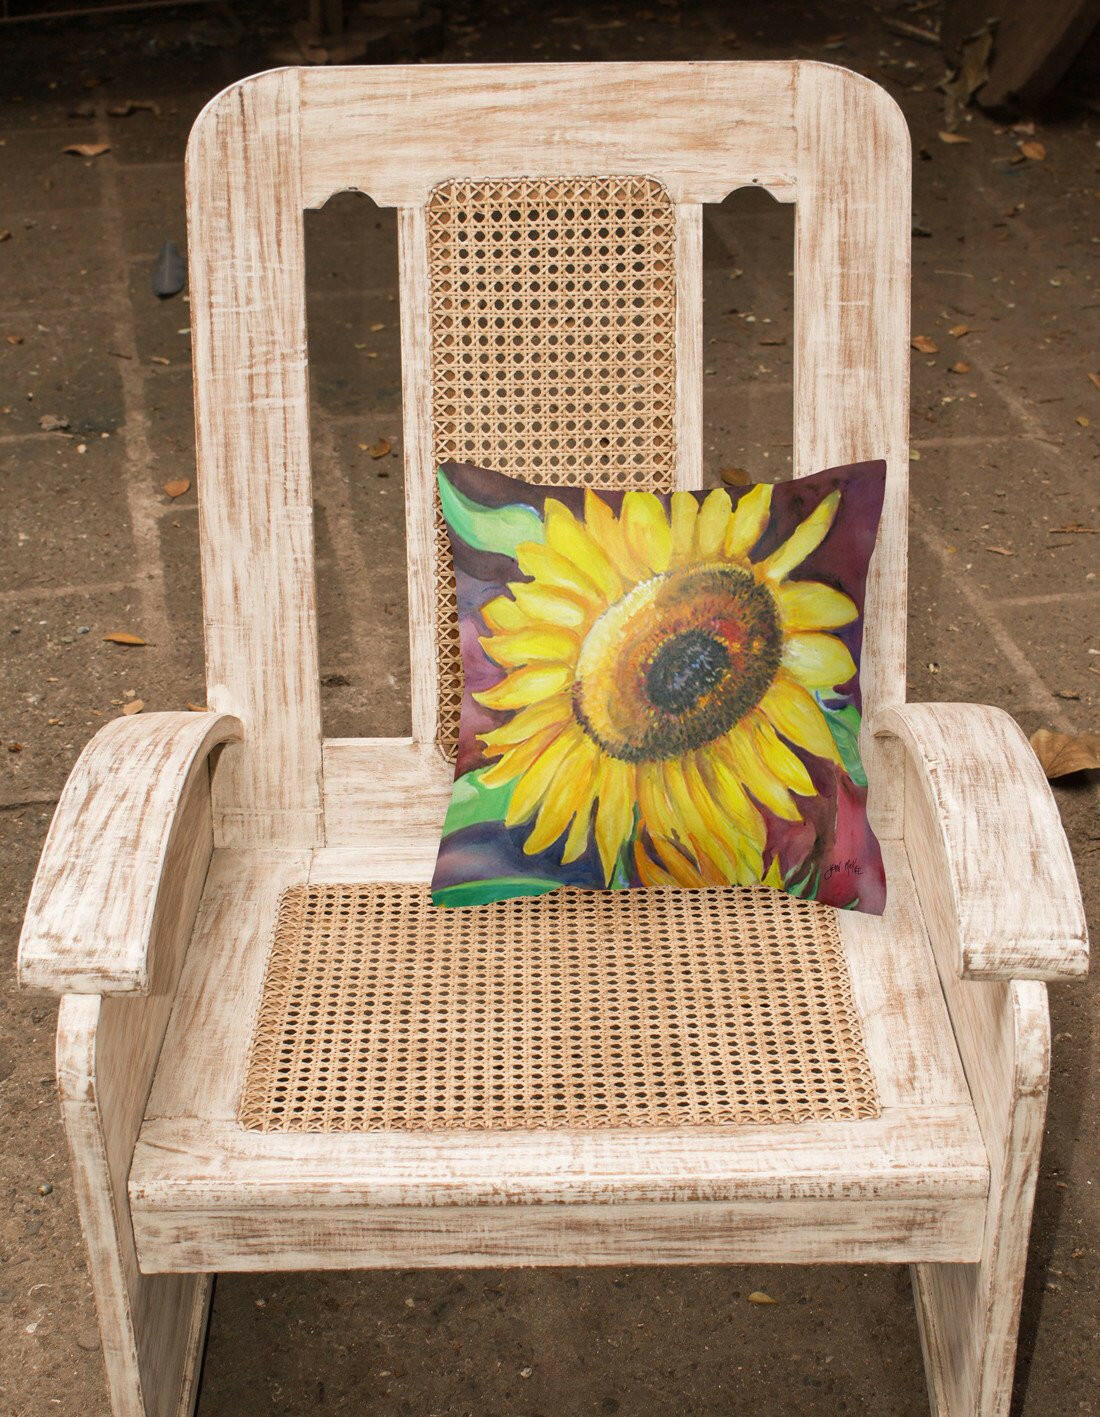 Sunflowers Canvas Fabric Decorative Pillow JMK1268PW1414 by Caroline's Treasures